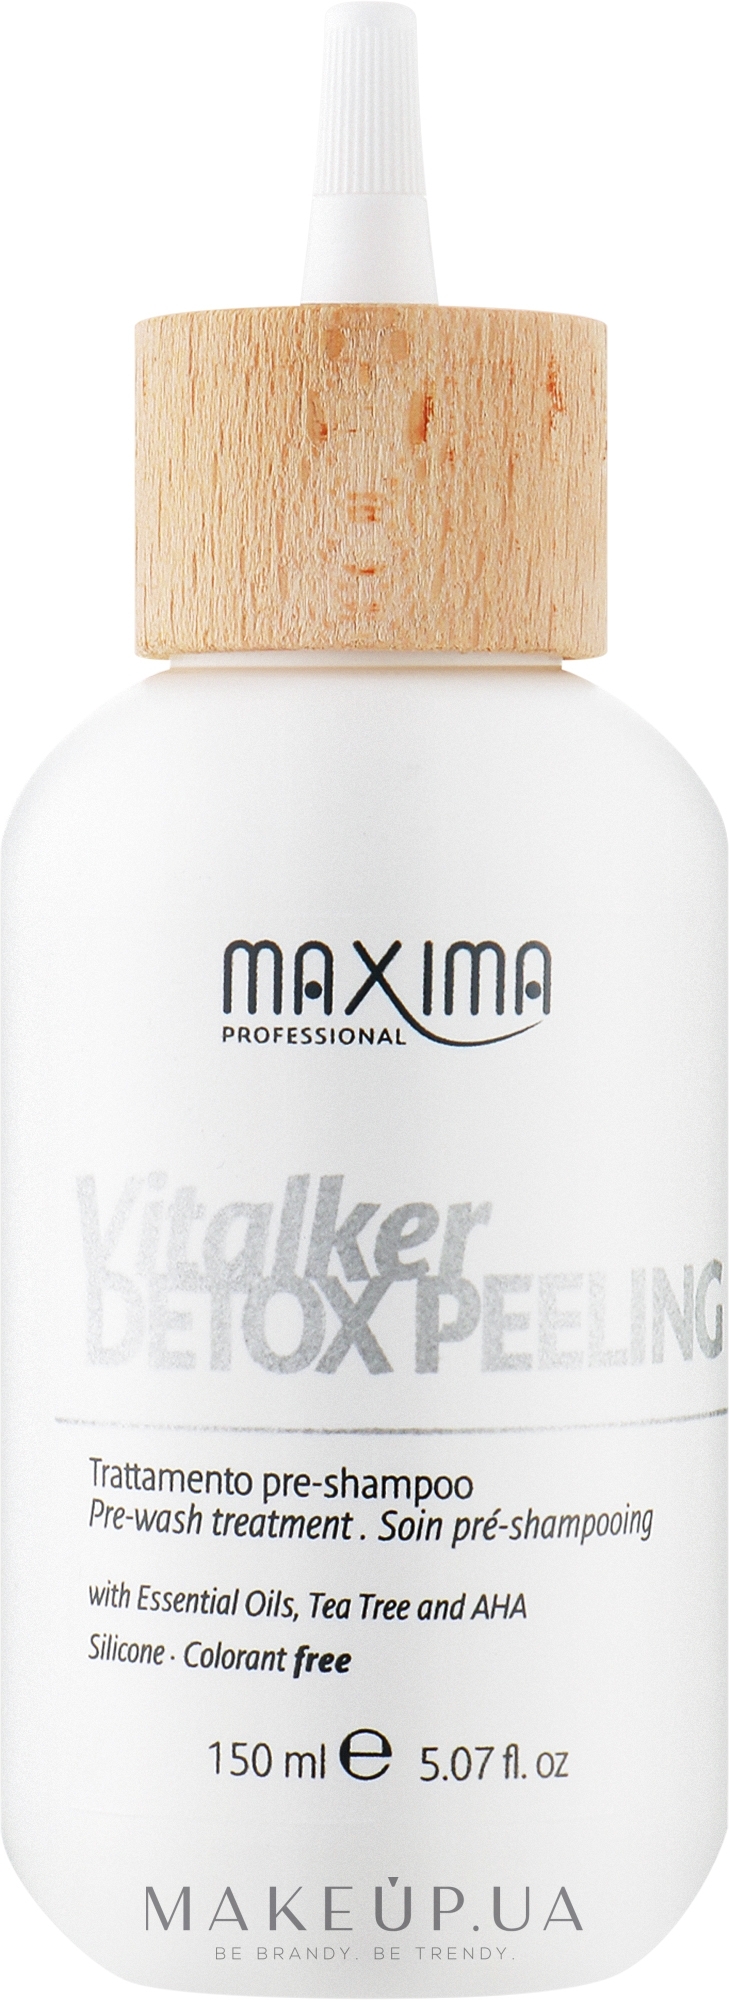 Детокс-пилинг перед шампунем для кожи головы - Maxima Vitalker Detox Peeling Pre Shampoo Hair Treatment — фото 150ml